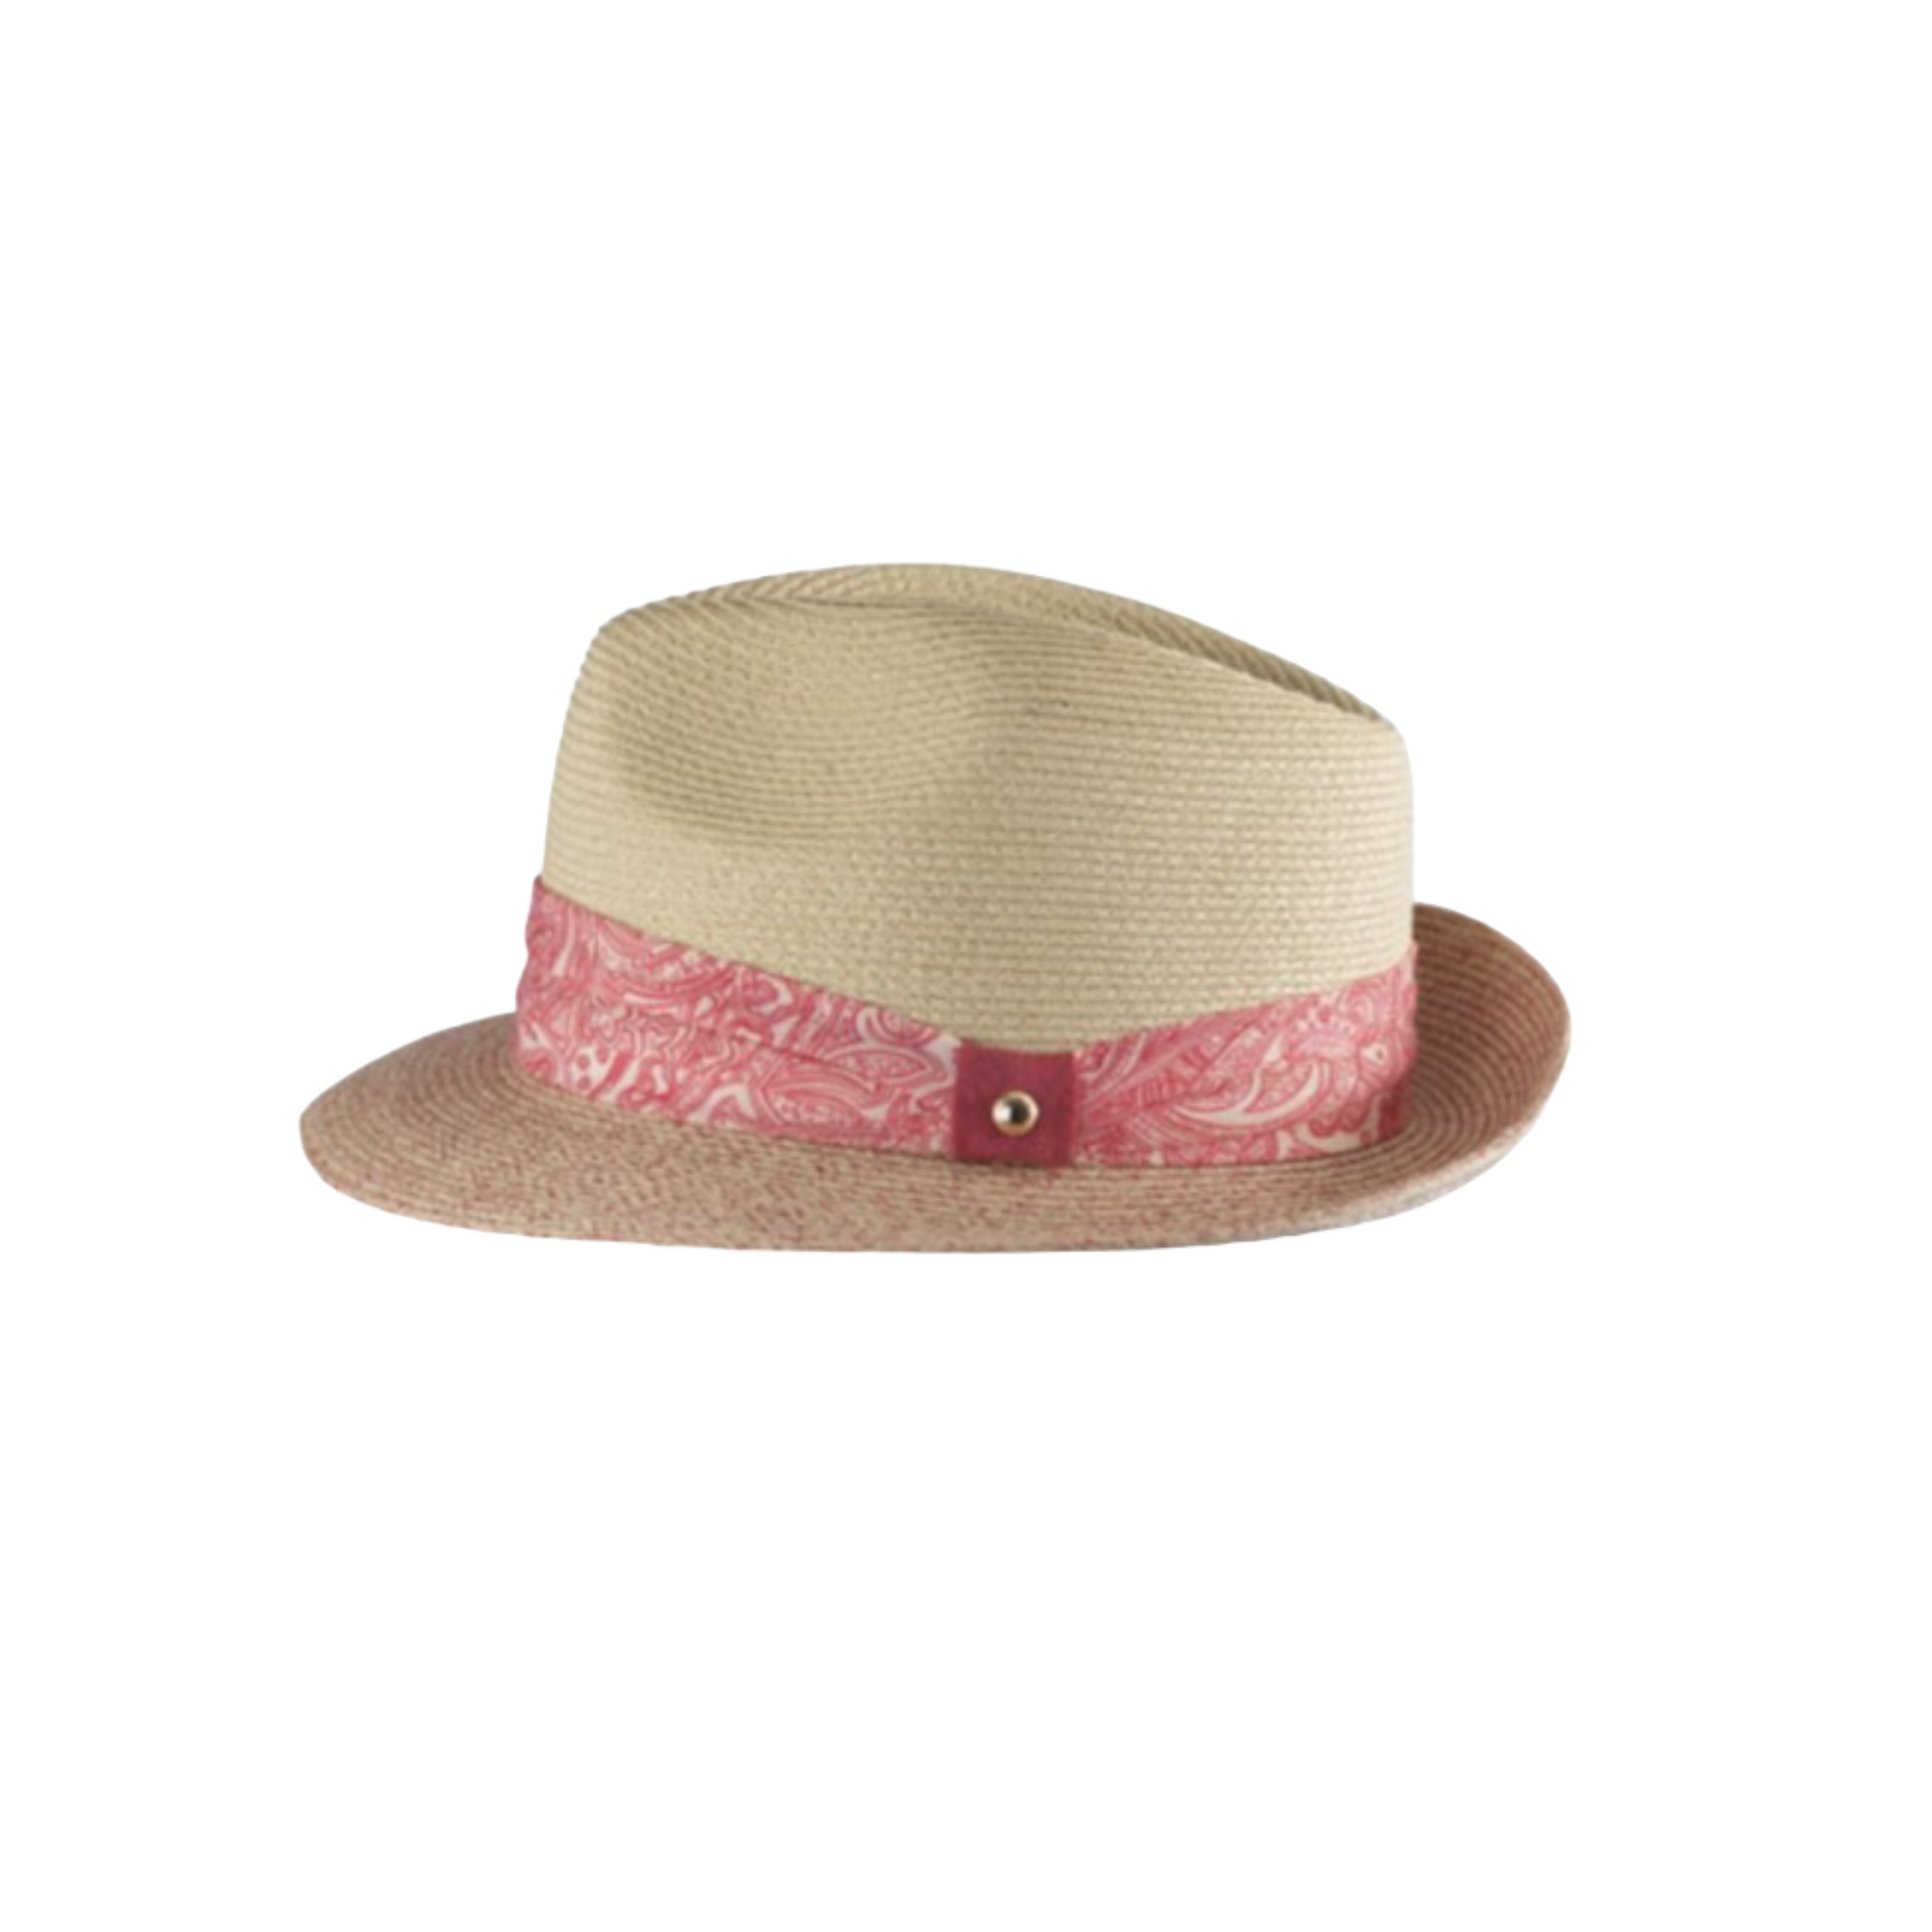 Kooringal Ladies Thea Fedora Hat - Pink